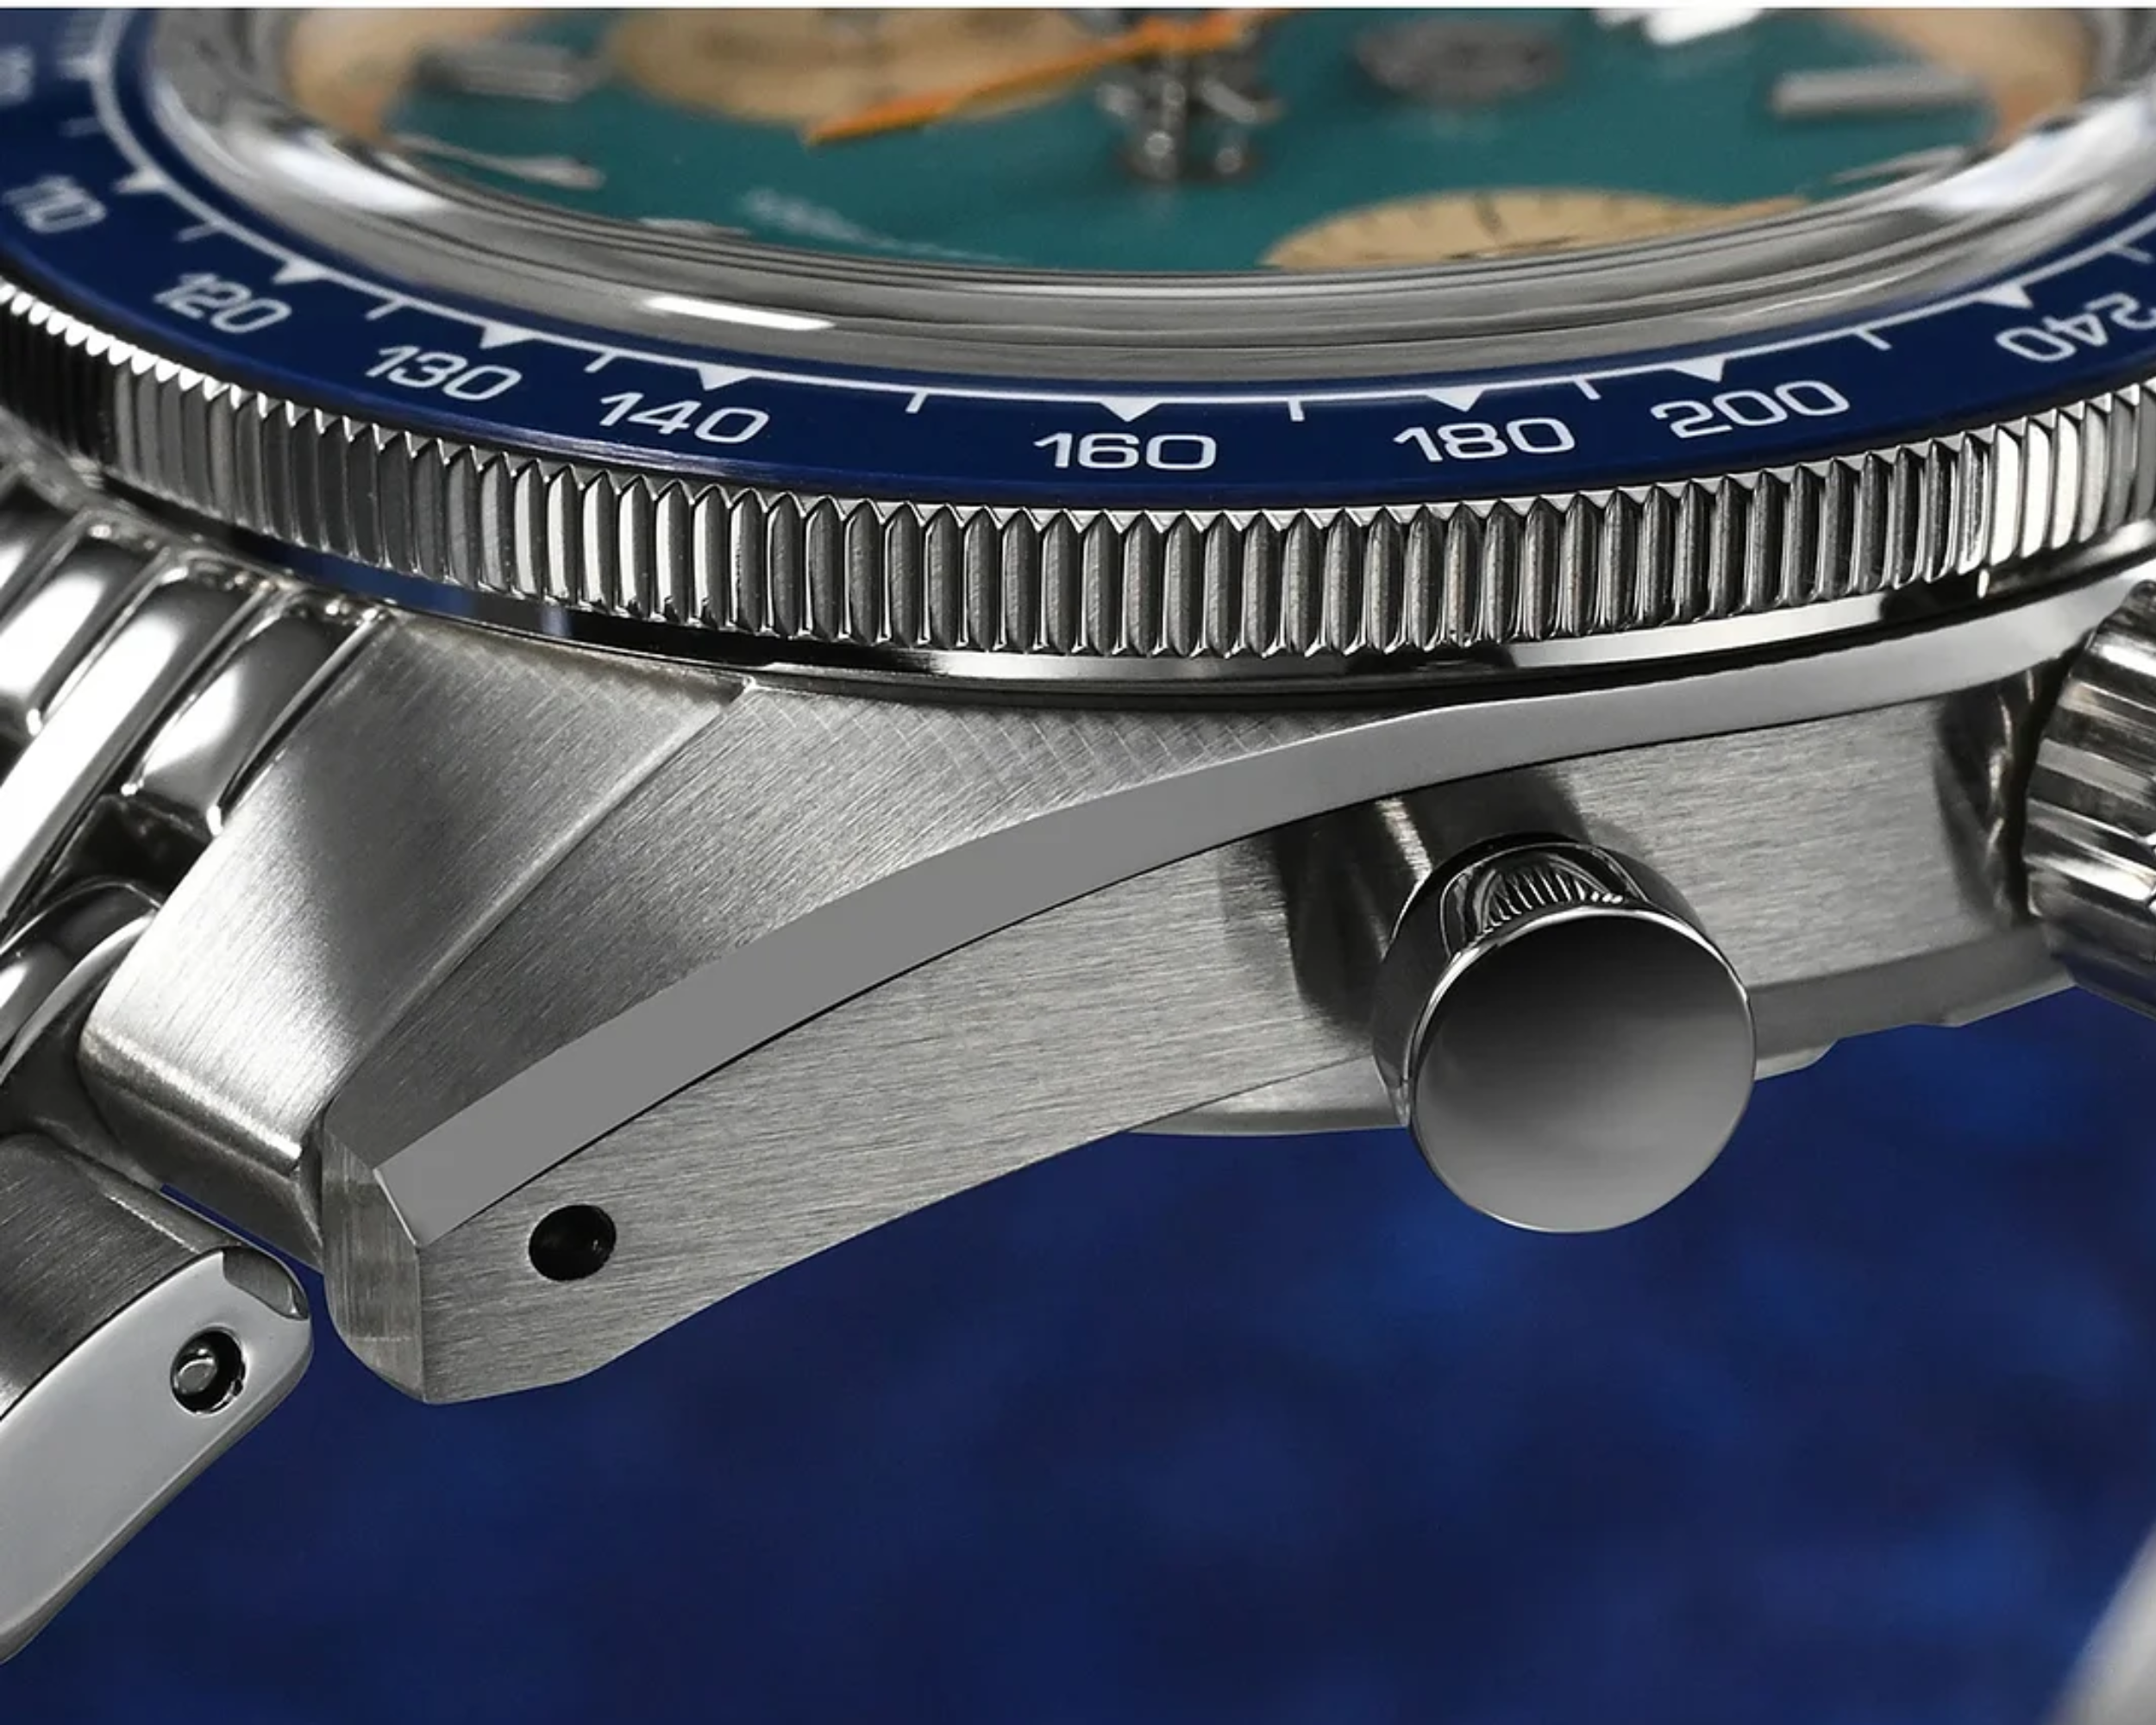 San Martin Chronograph VK64 Quartz Watch Original Design SN0116 - Avacado